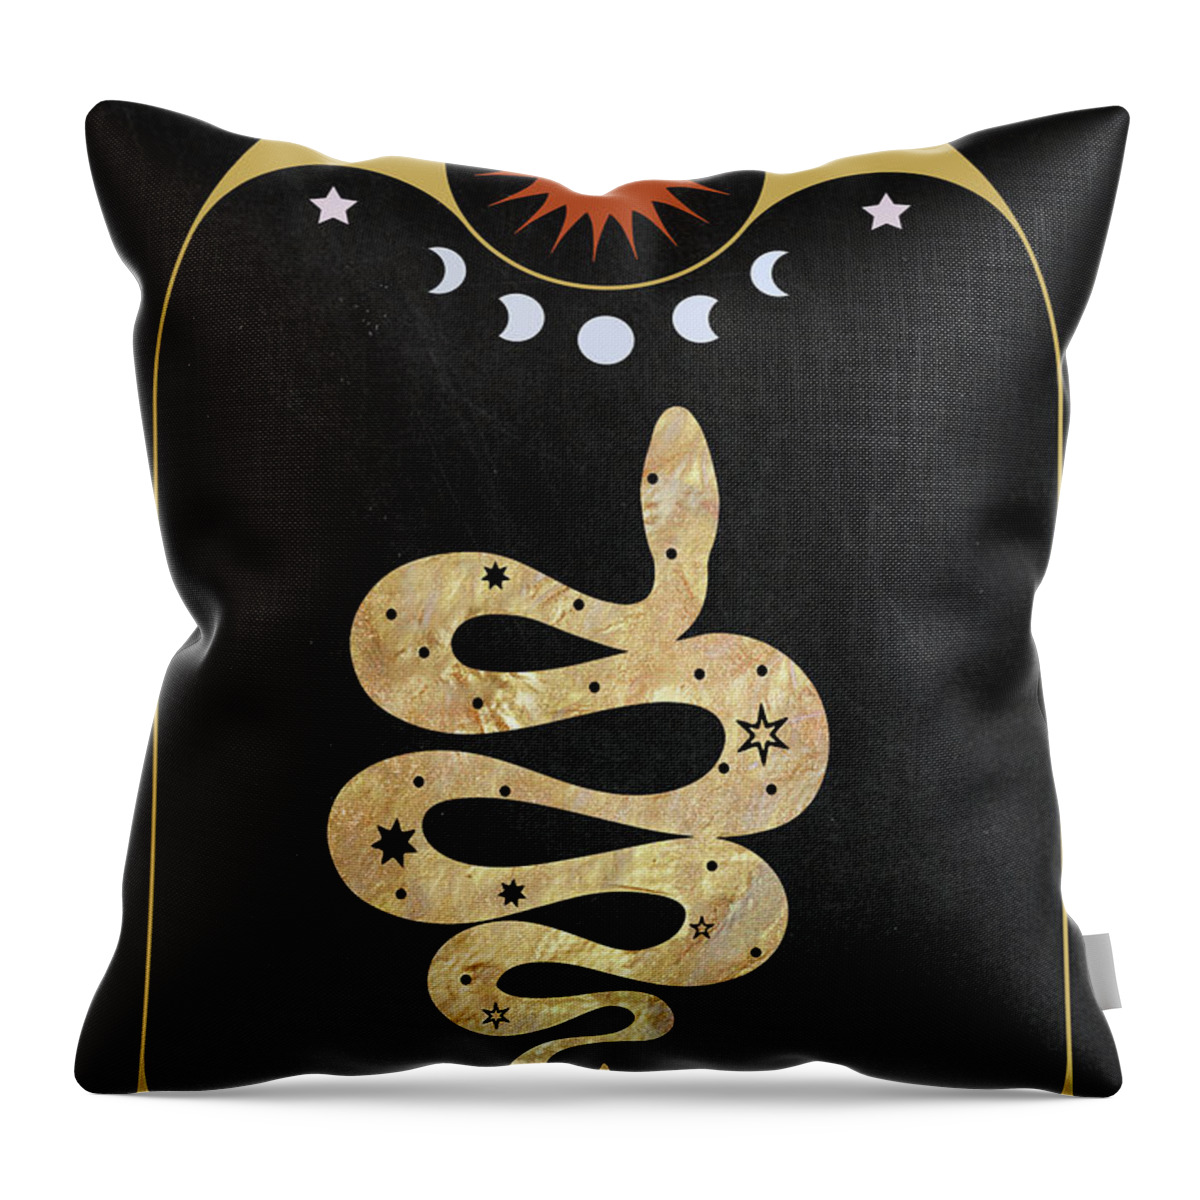 Golden Serpent Throw Pillow featuring the painting Golden Serpent Magical Animal Art by Garden Of Delights